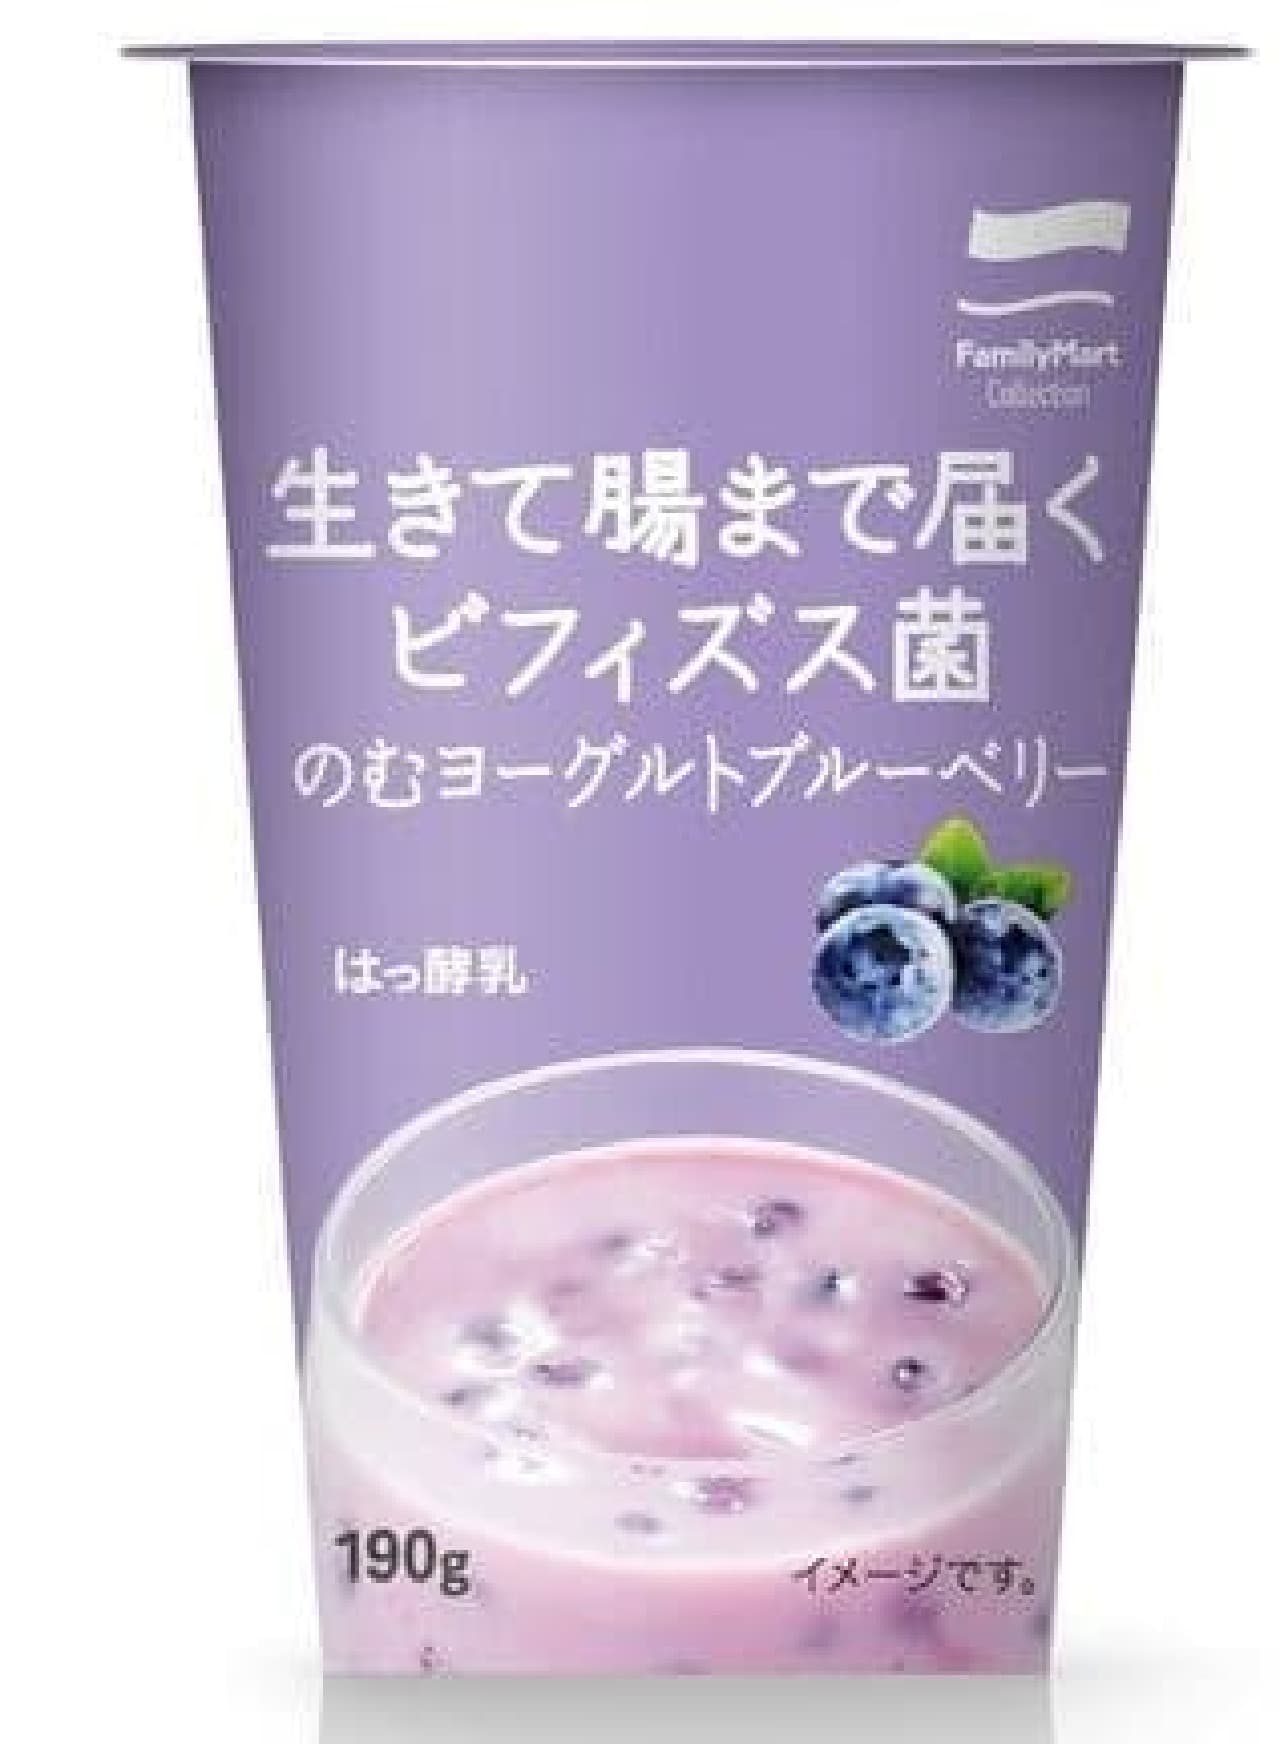 FamilyMart Collection Nomu Yogurt Blueberries